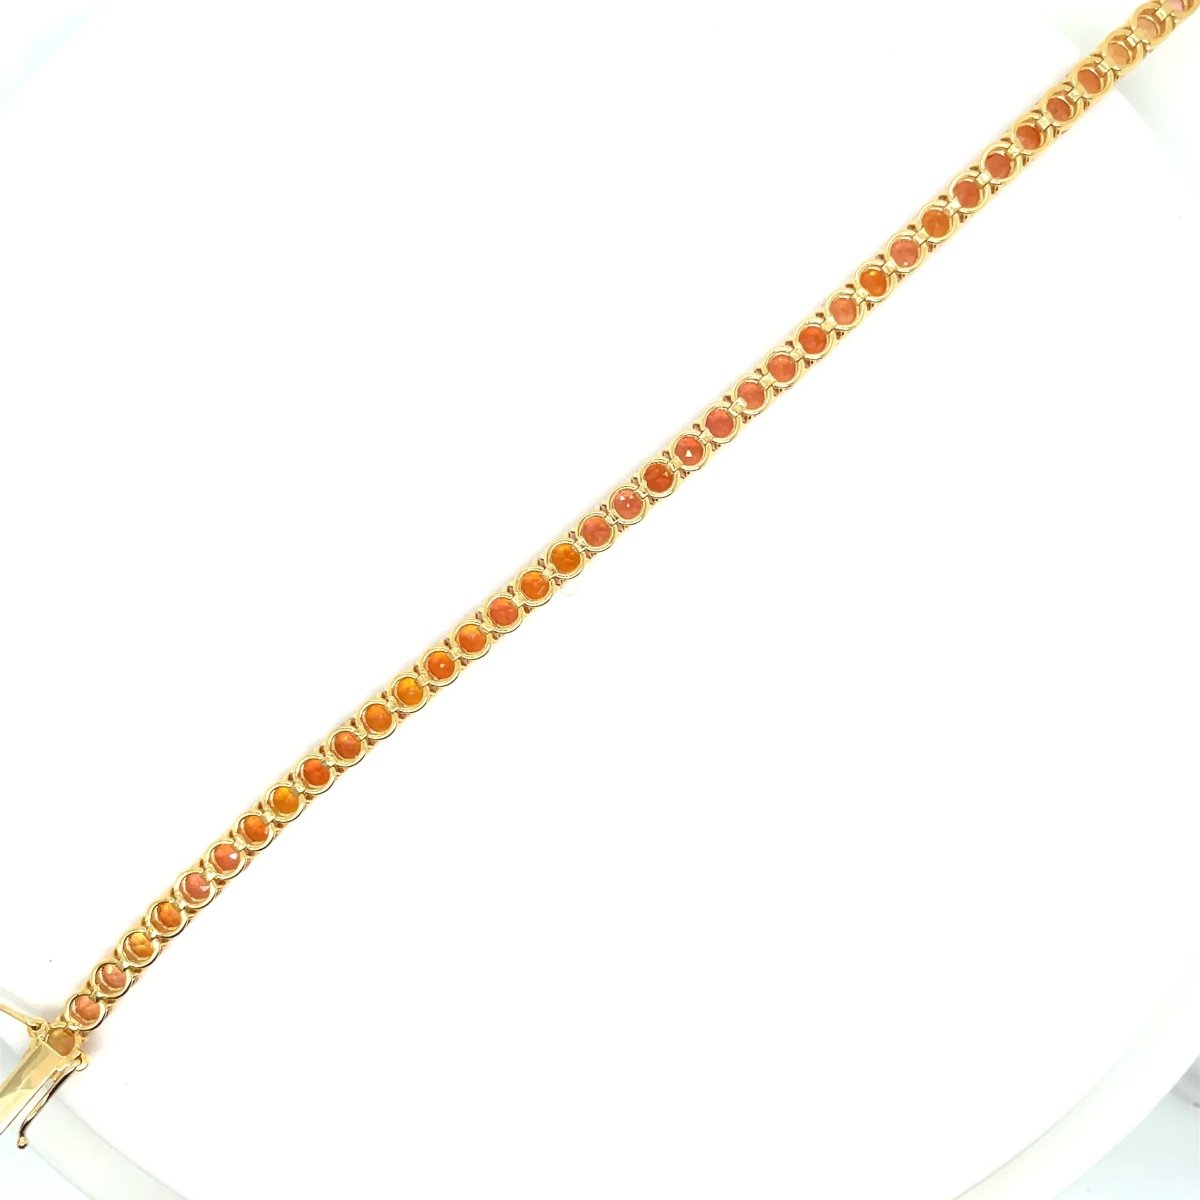 11 Carat Natural Padparadsha Sapphire Yellow Gold Tennis Bracelet - Castafiore